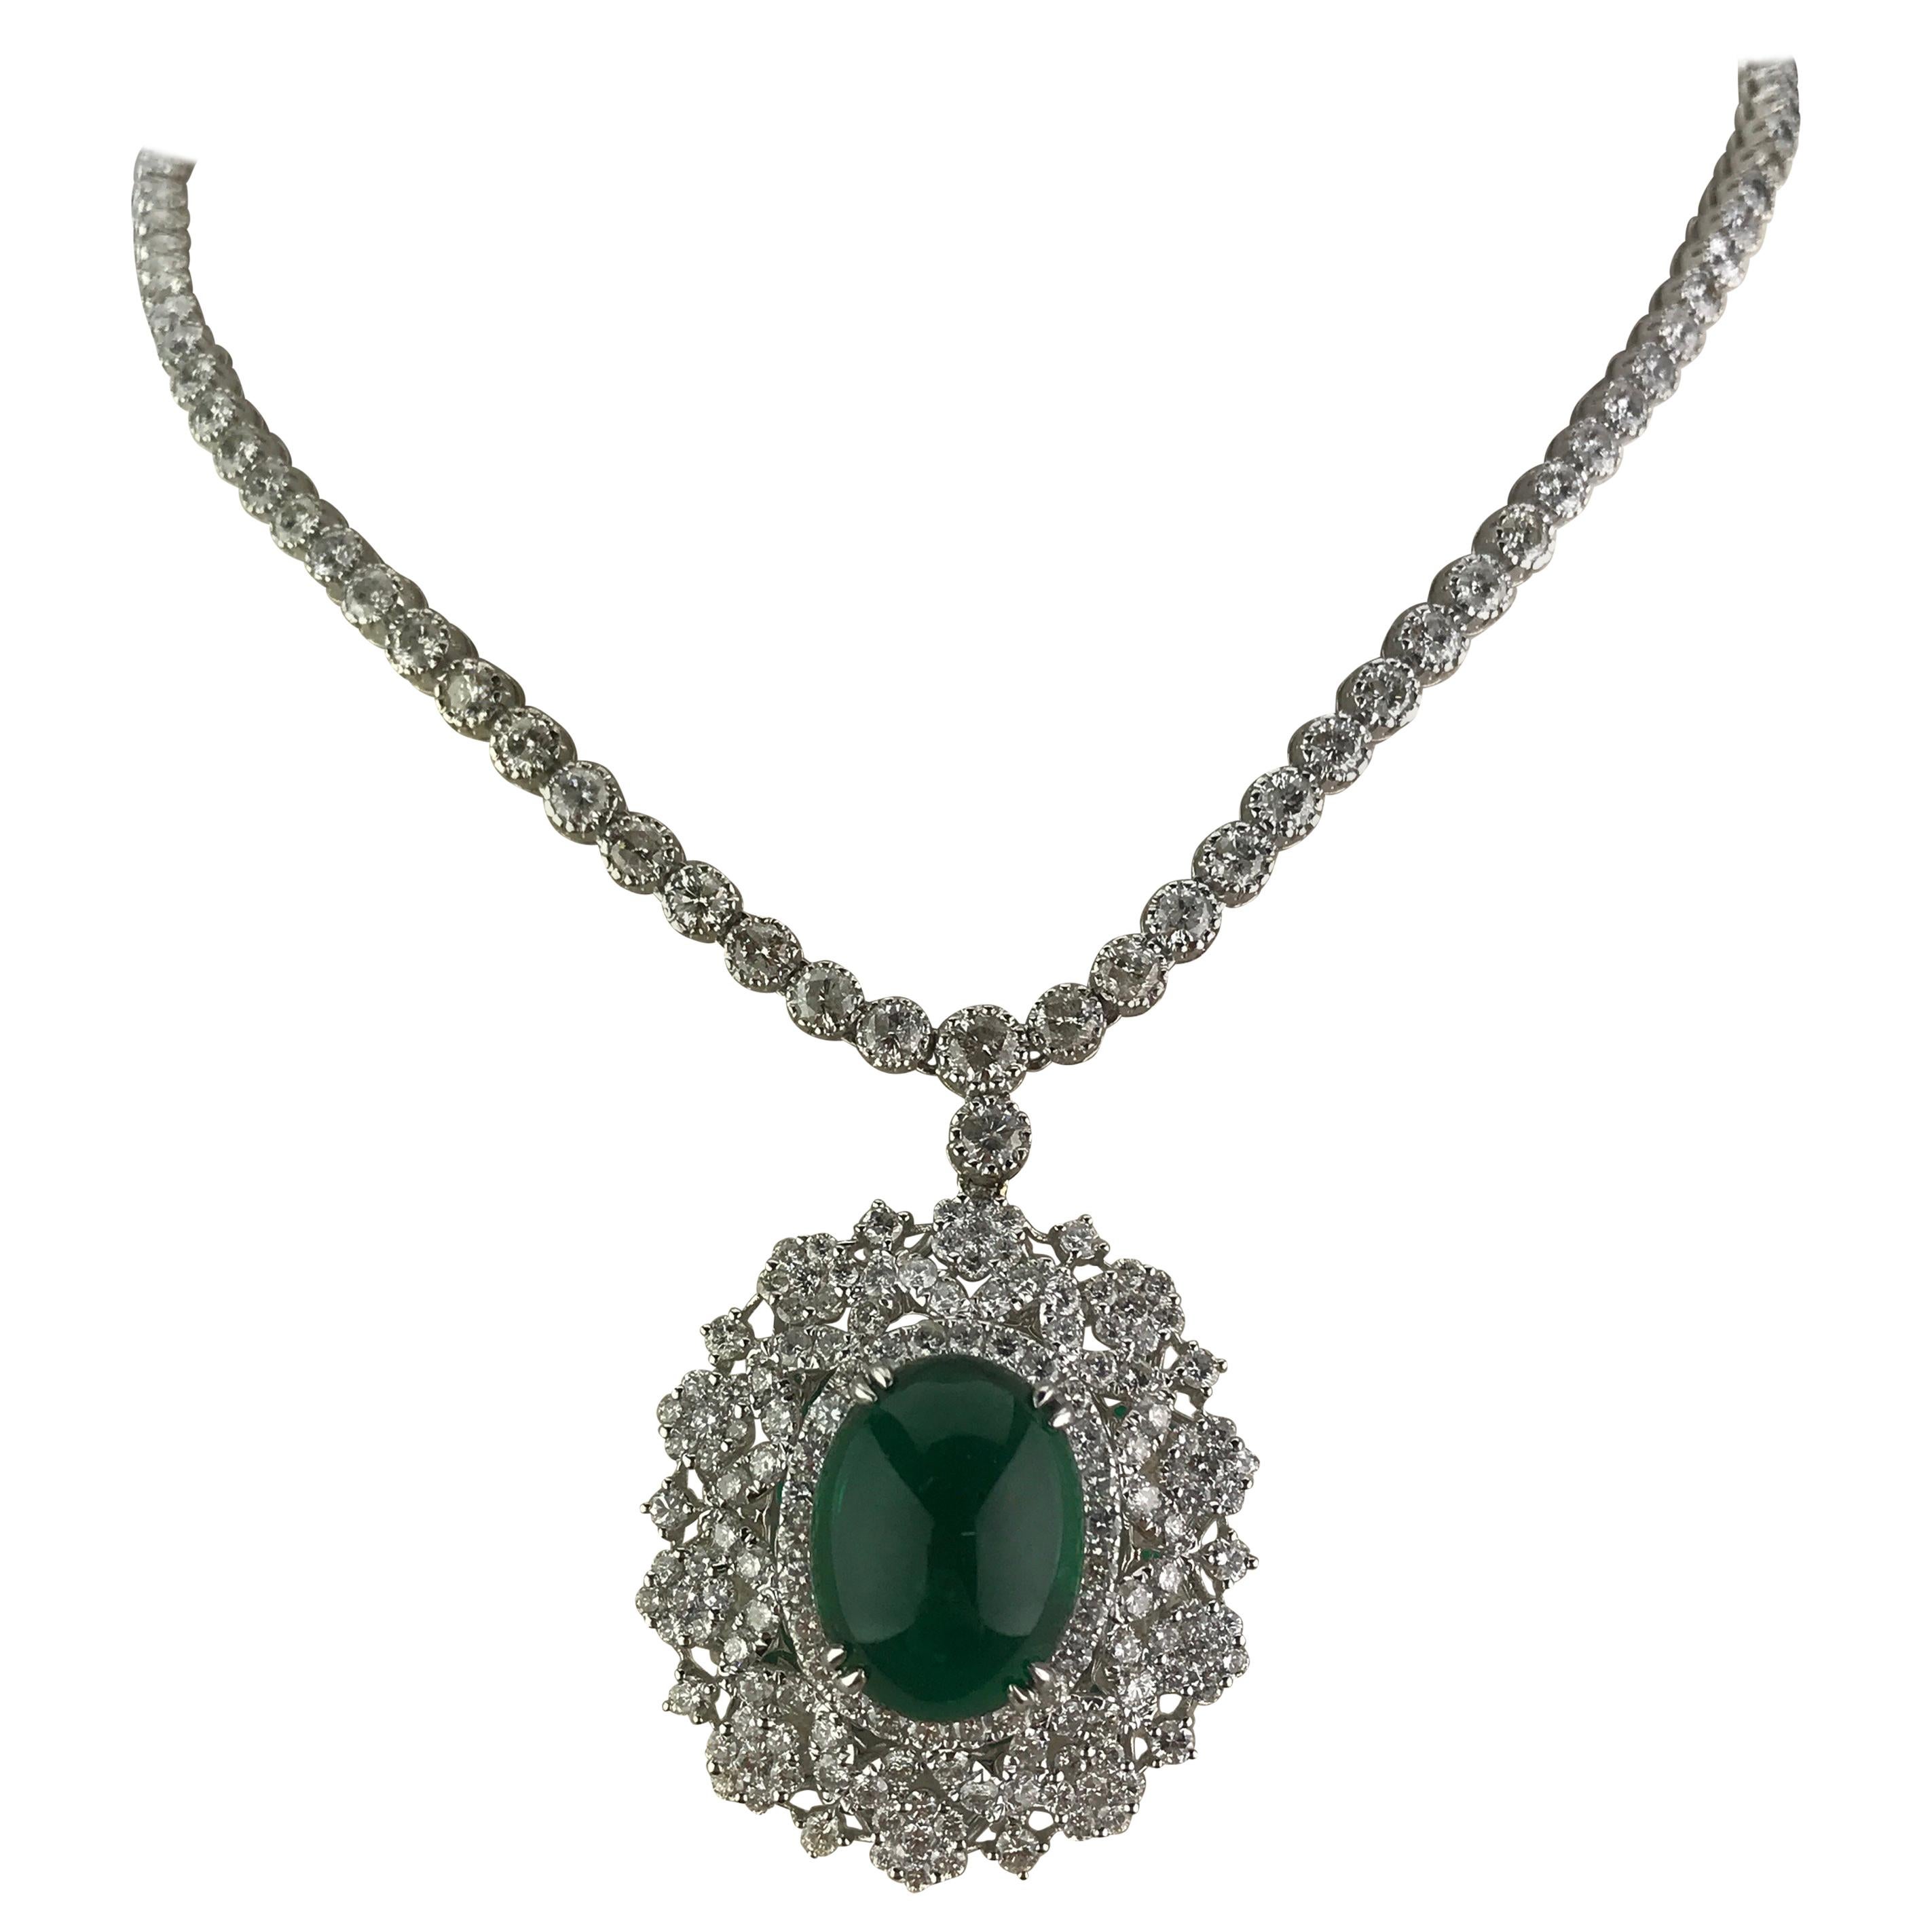 15.03 Carat Emerald Cabochon and Diamond Pendant Necklace